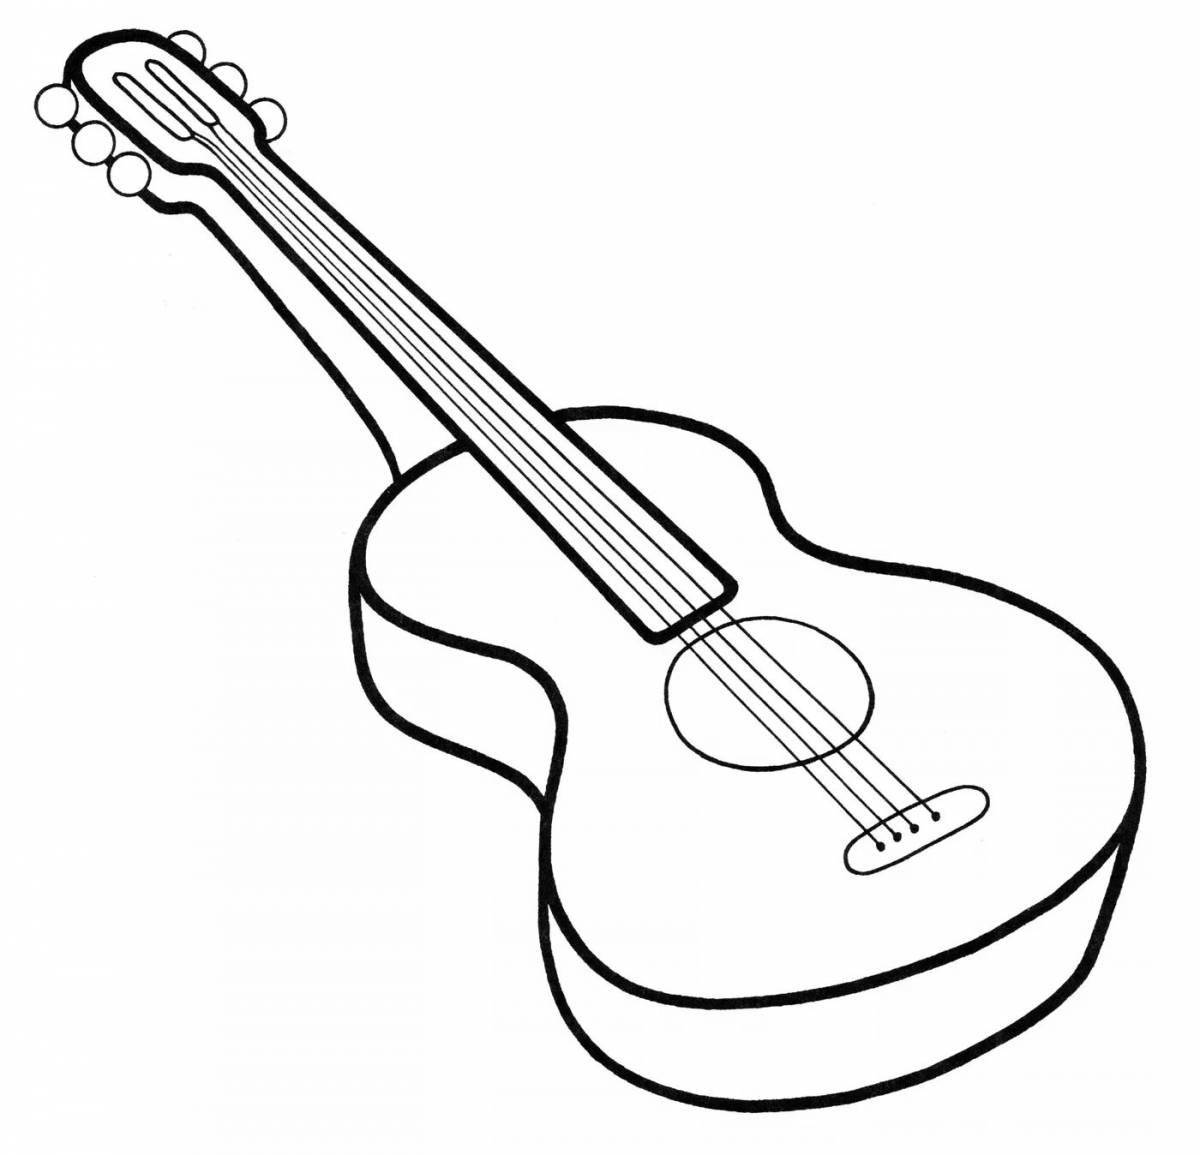 Musical instruments for preschoolers #16